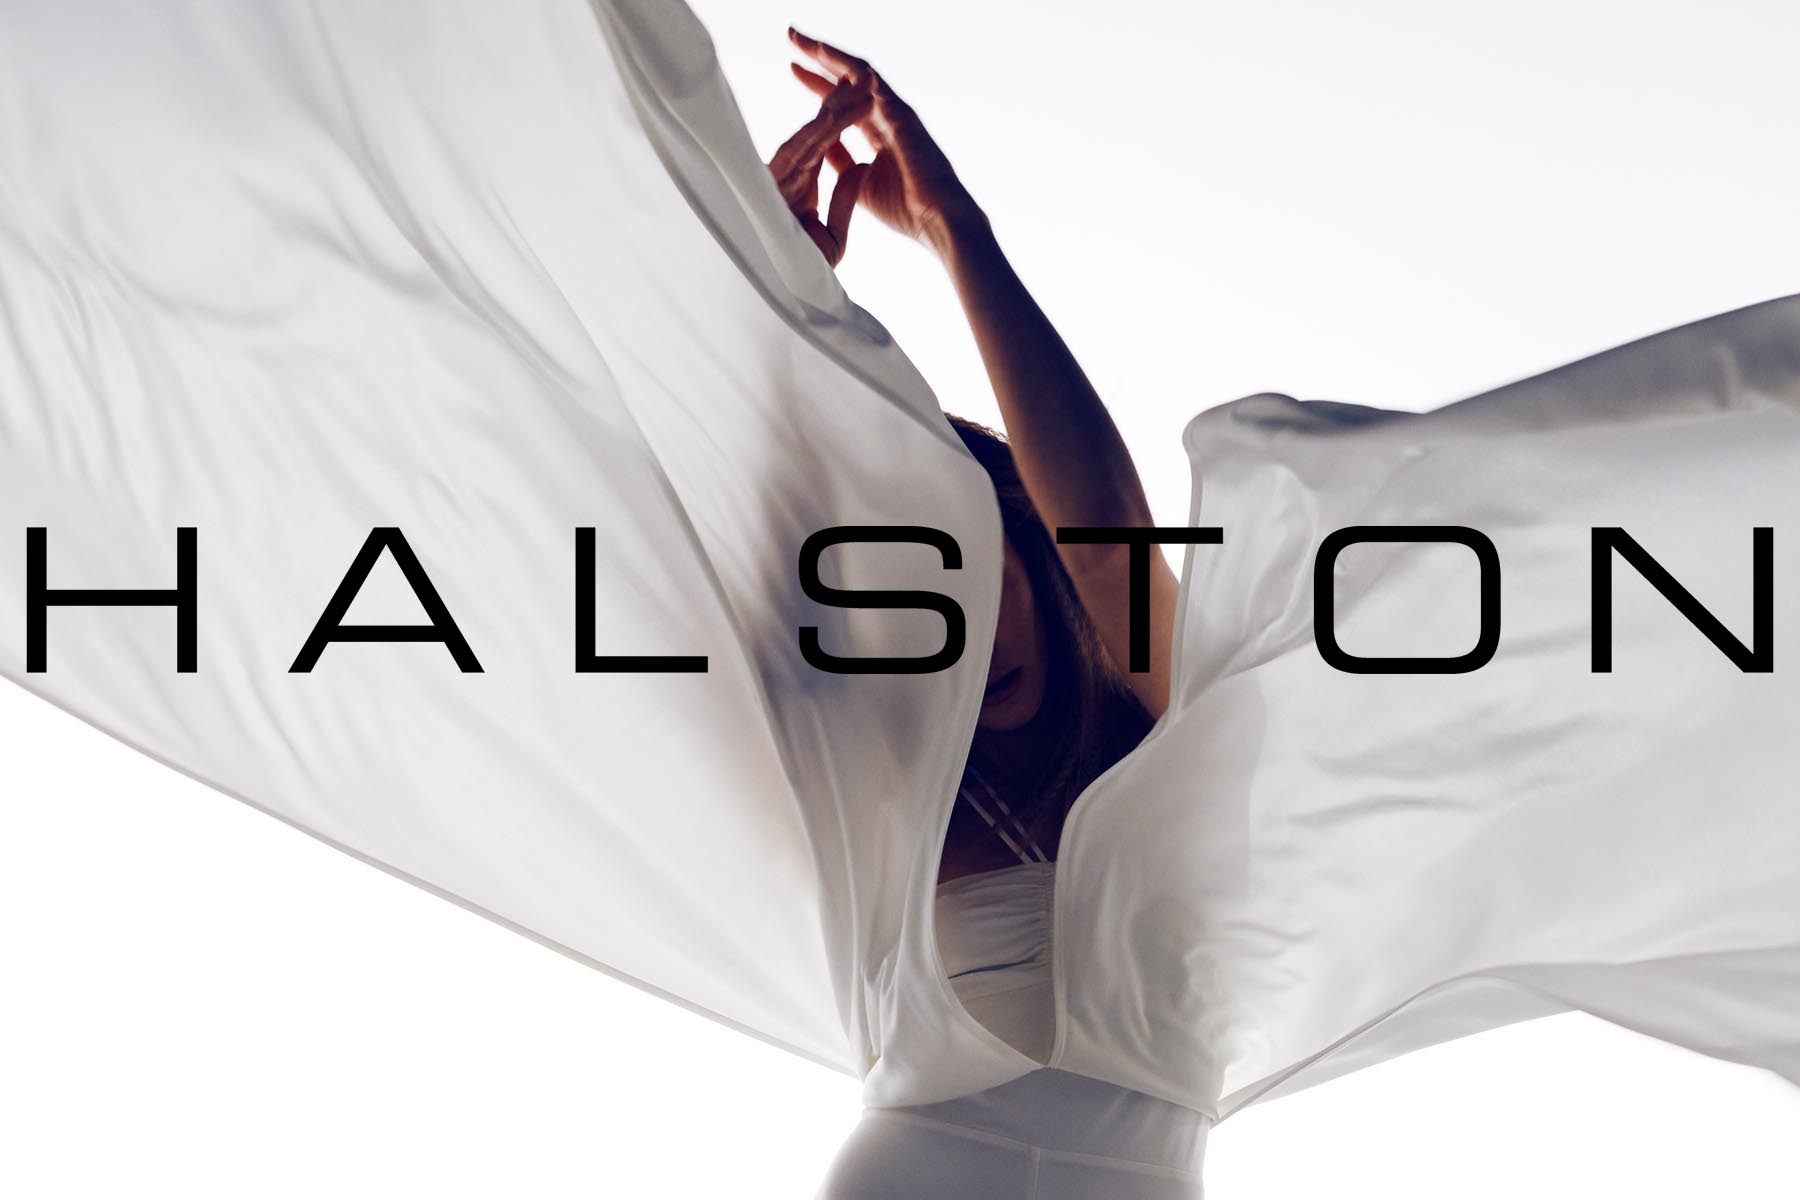 Halston Fashion Advertising Campaign Photography I Greg Sorensen I Fashion & Beauty Photographer I NYC